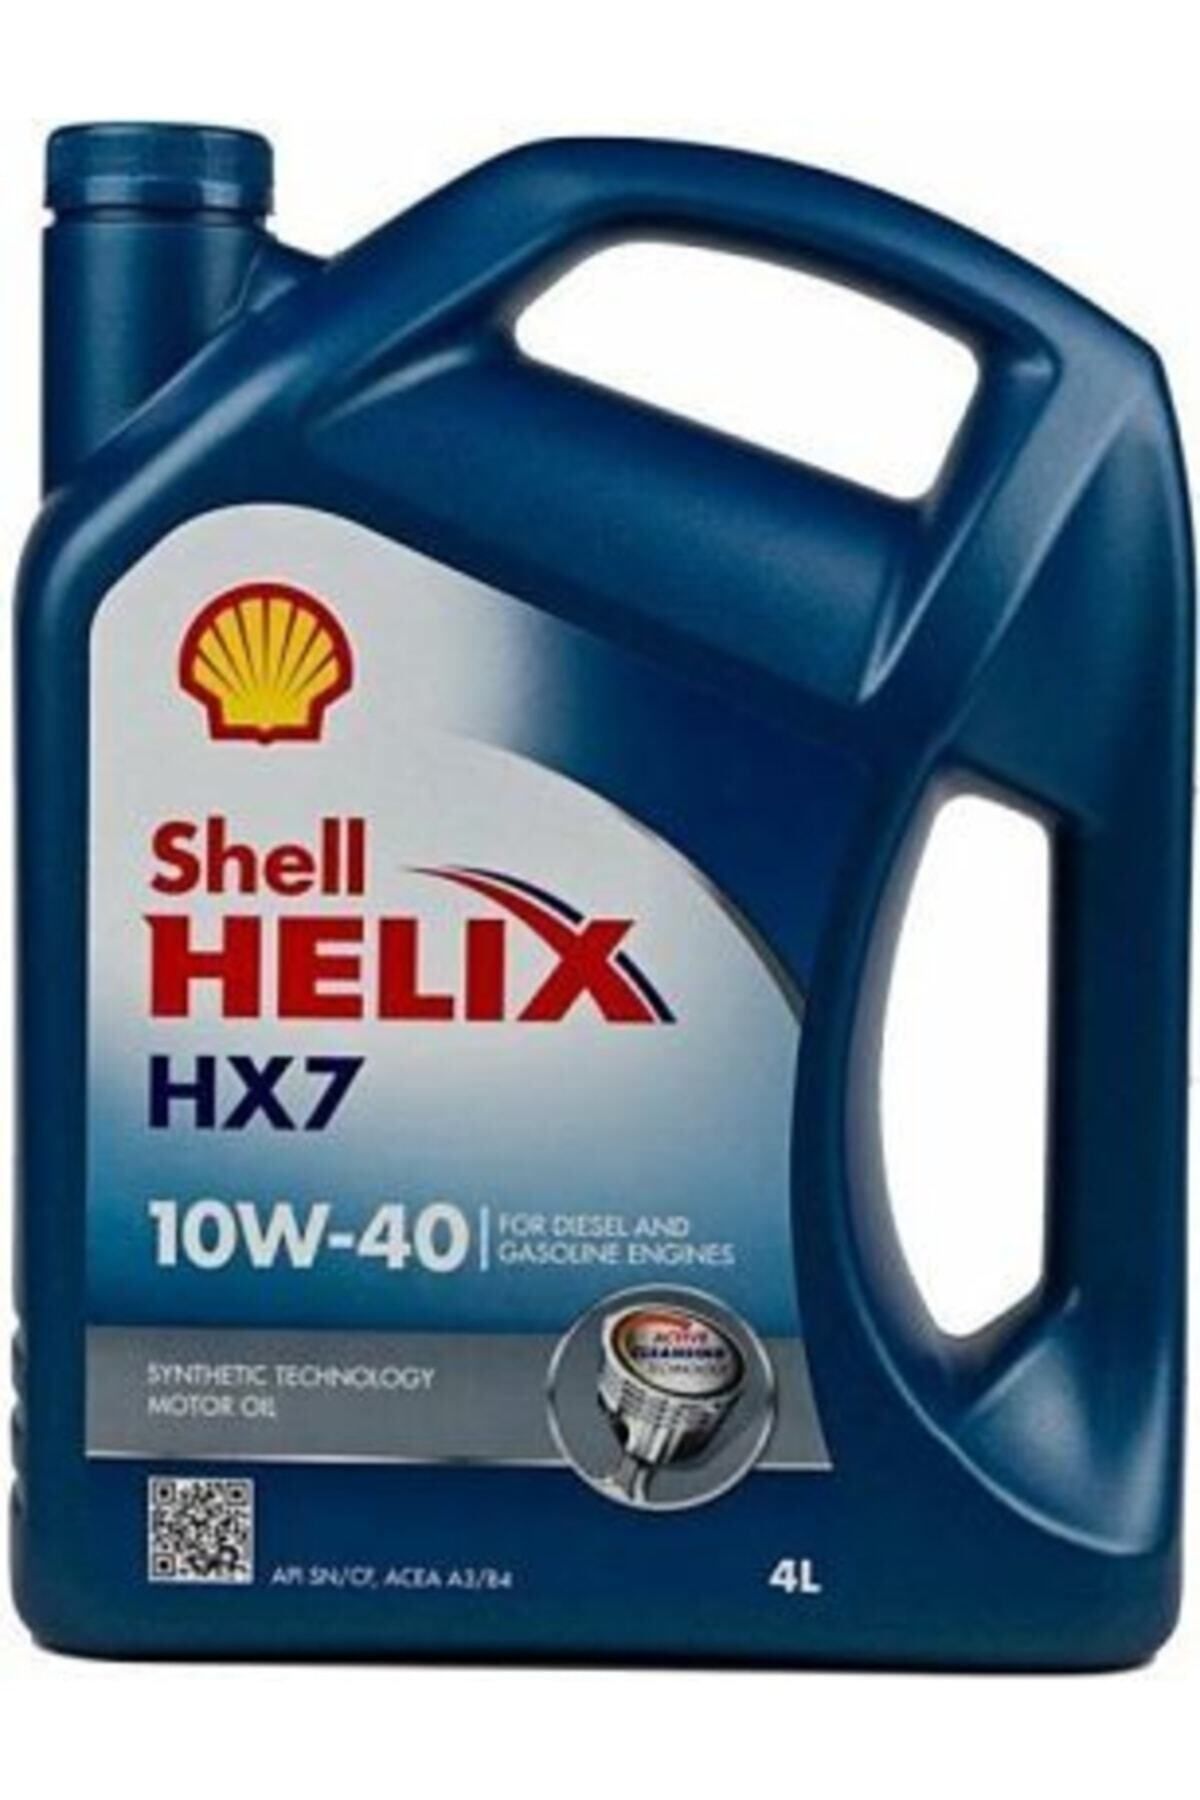 Shell Helix Hx7 10w/40 4 Litre